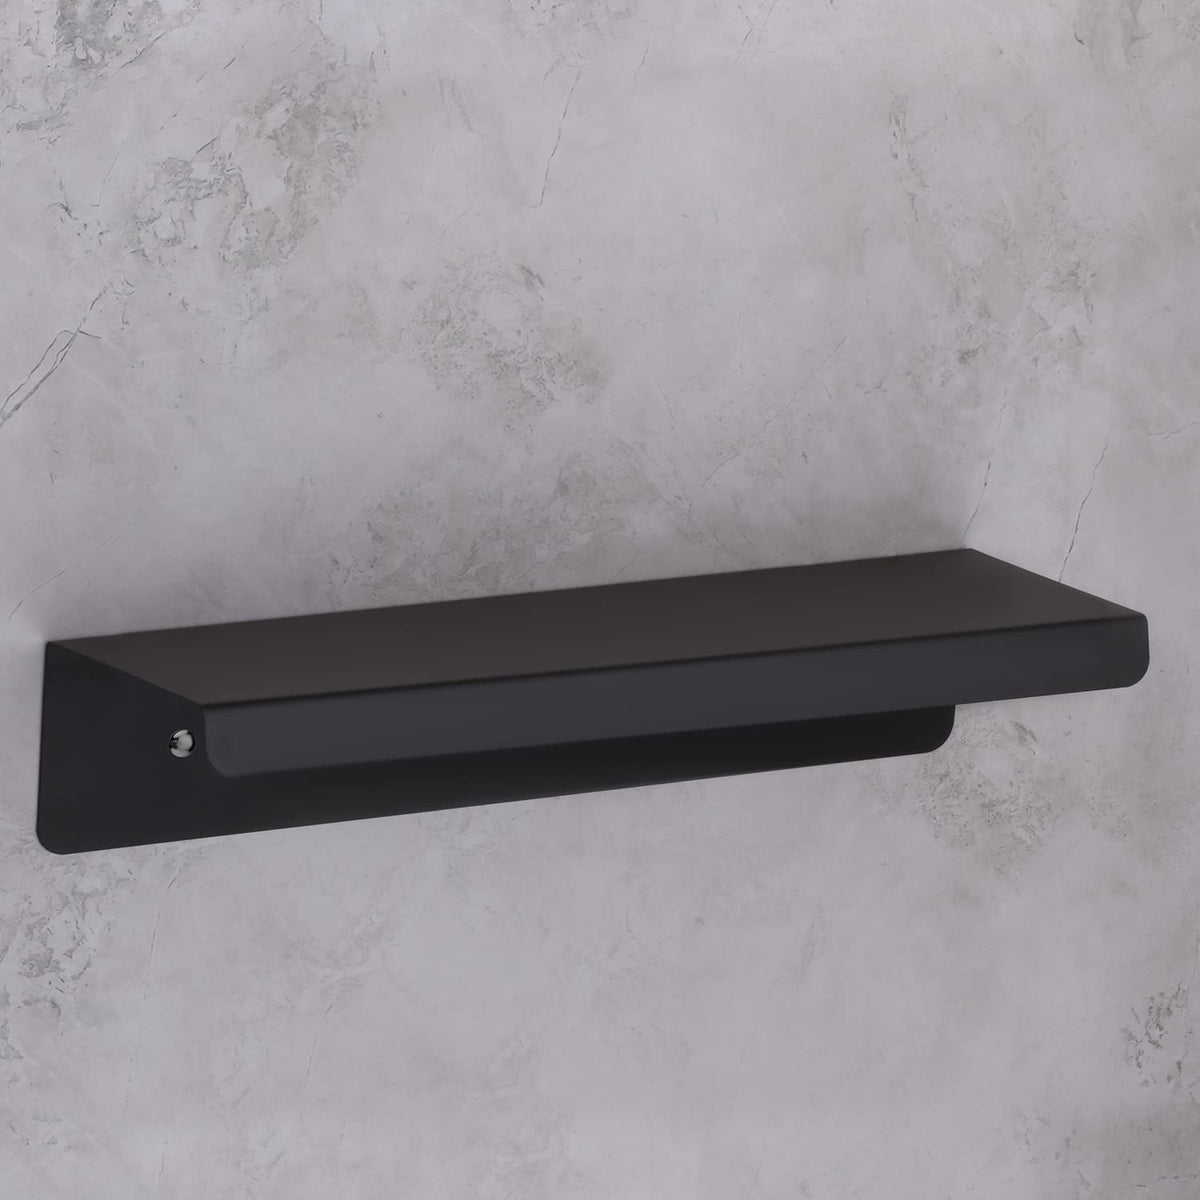 Plantex Stainless Steel Bathroom Shelf/Floating Shelf/Storage Organizer/Rack for Bathroom/Kitchen/Living-Room/Bathroom Accessories - Wall Mount (Matt Black - 14x5 inche)